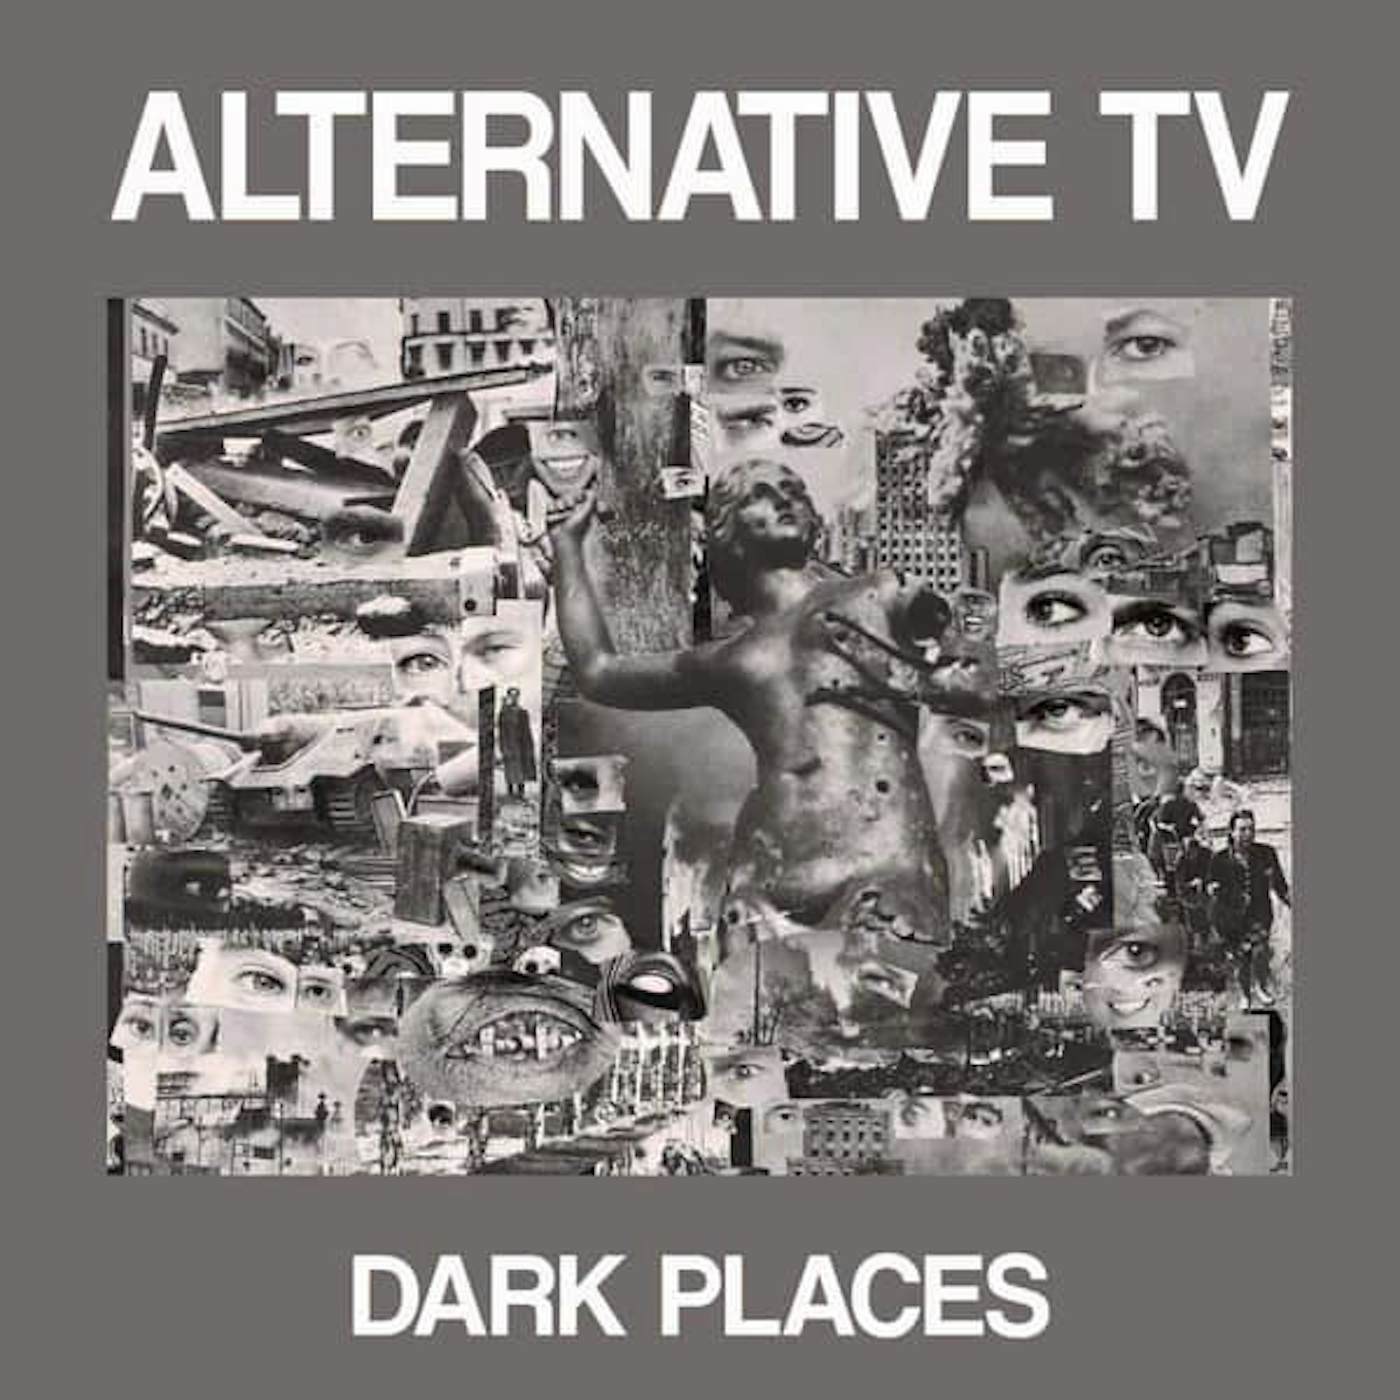 Alternative TV Dark Places Vinyl Record